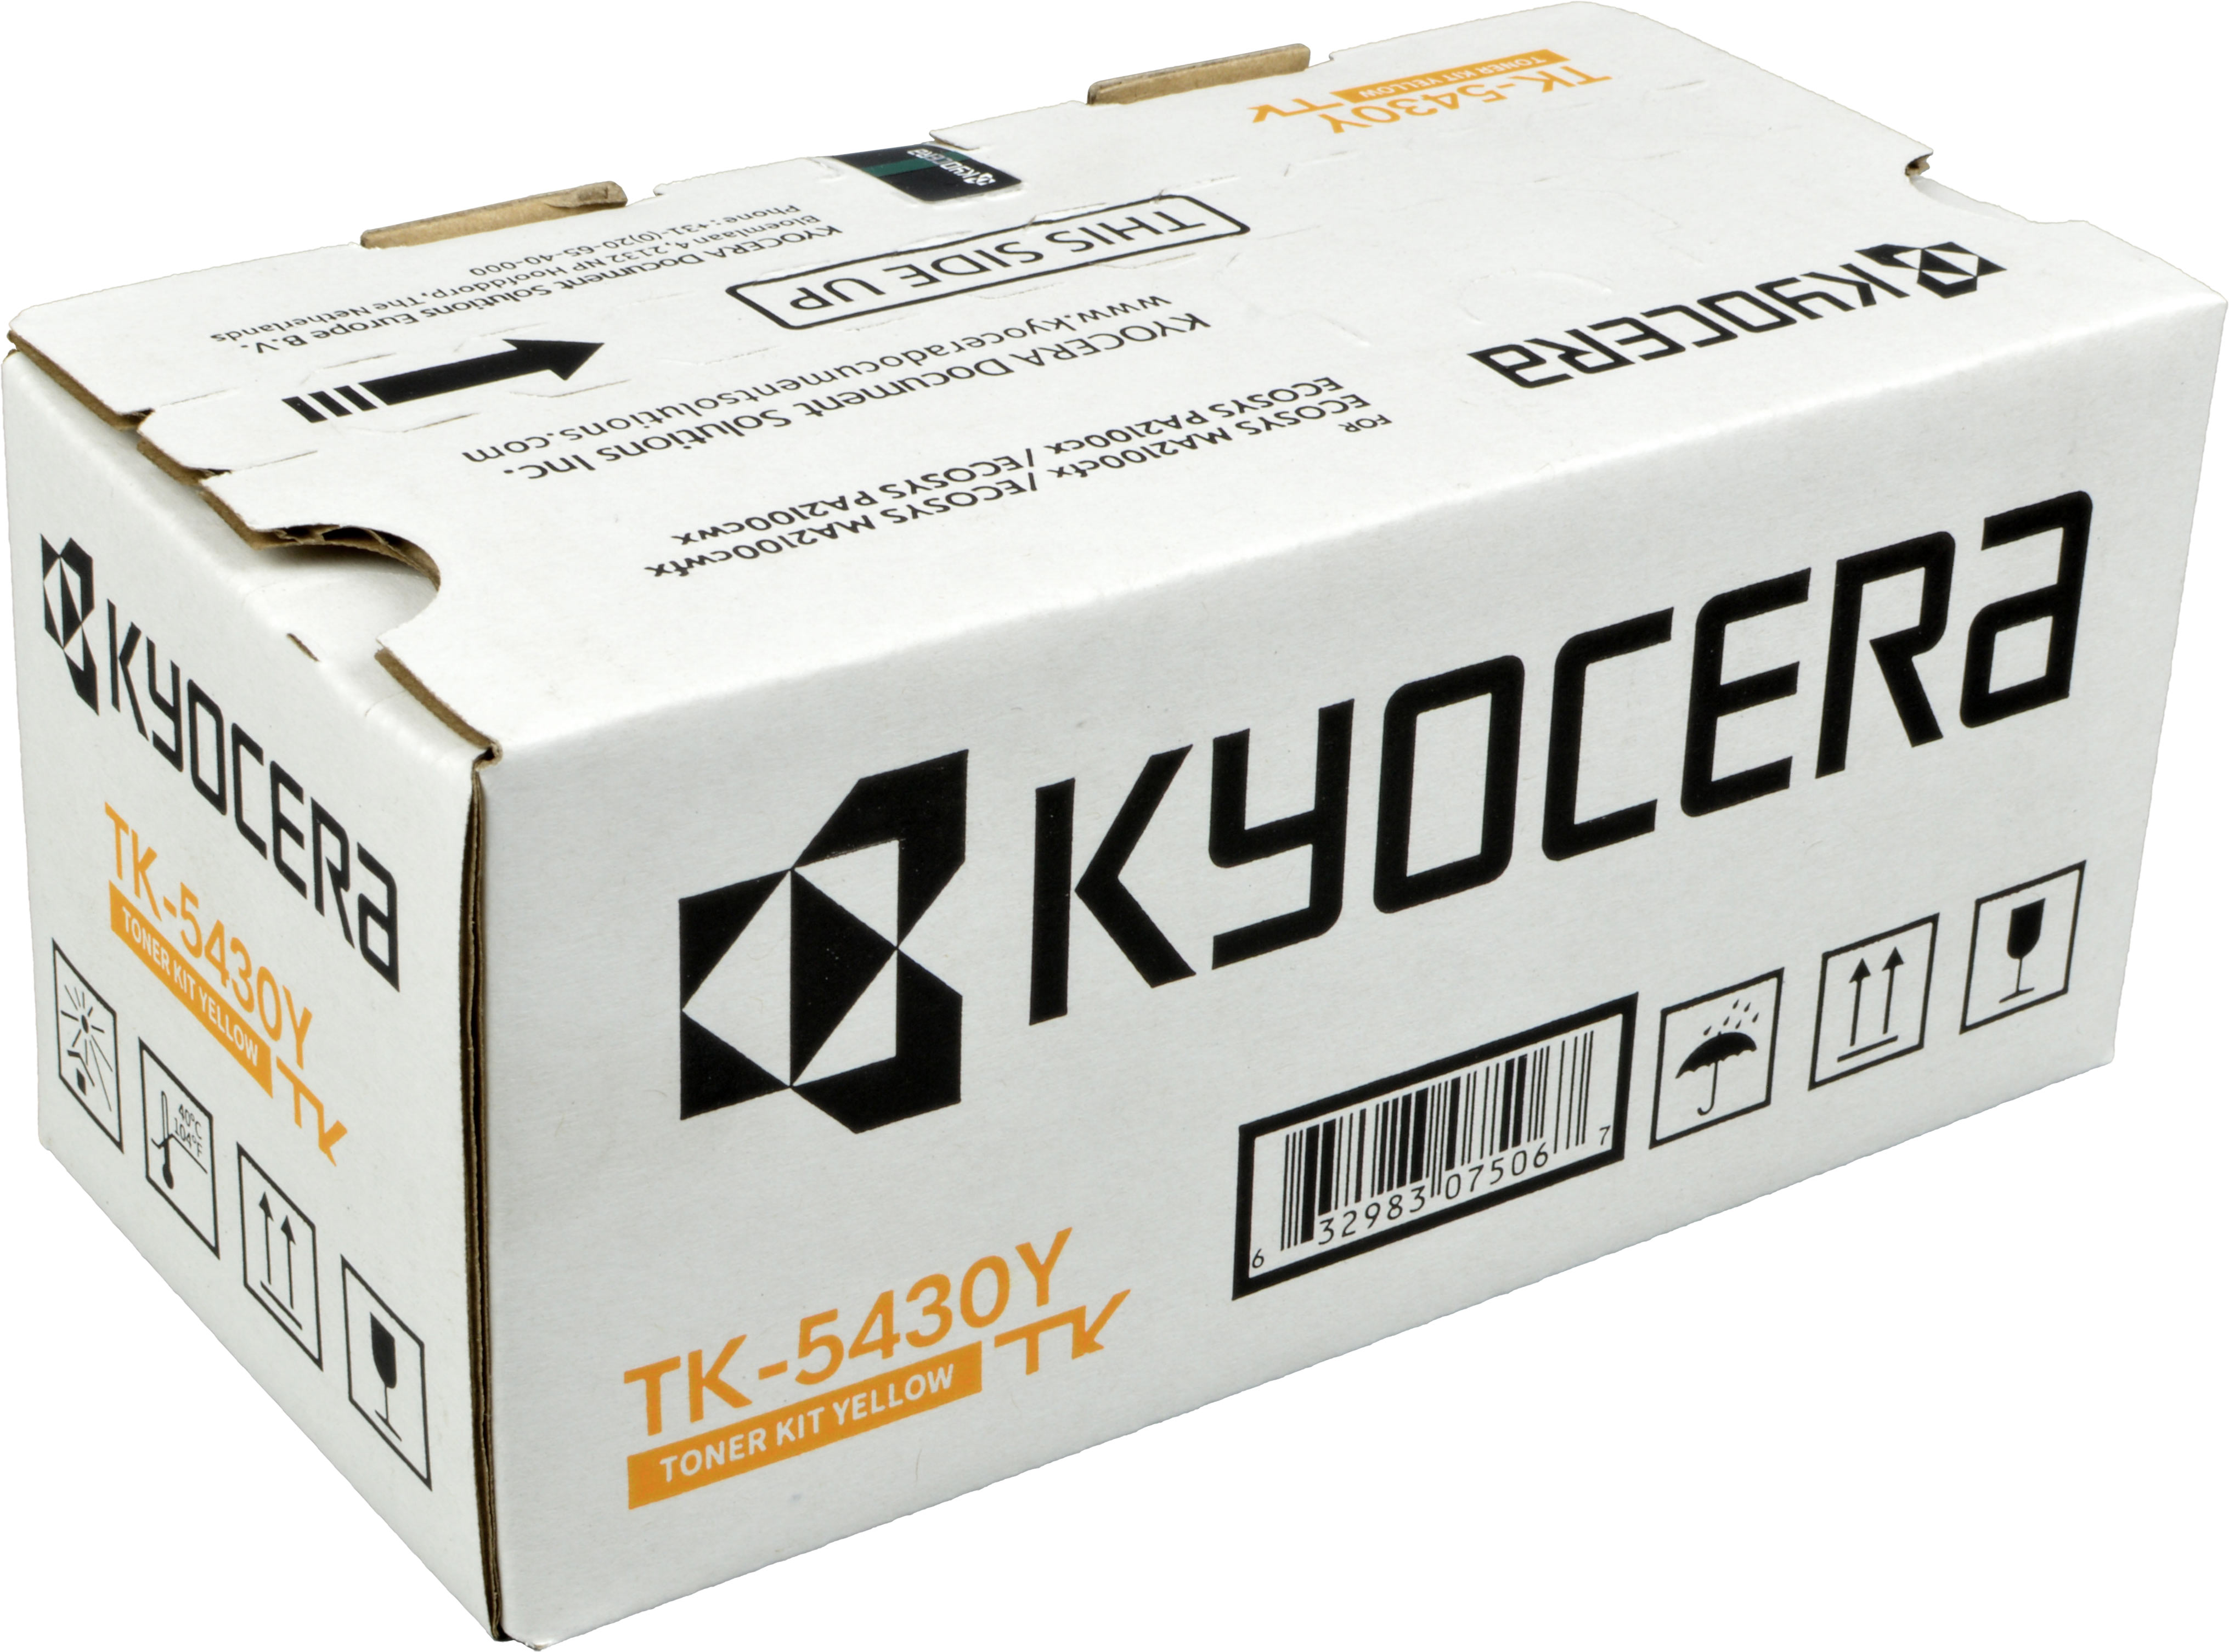 Kyocera Toner TK-5430Y  1T0C0ACNL1  yellow